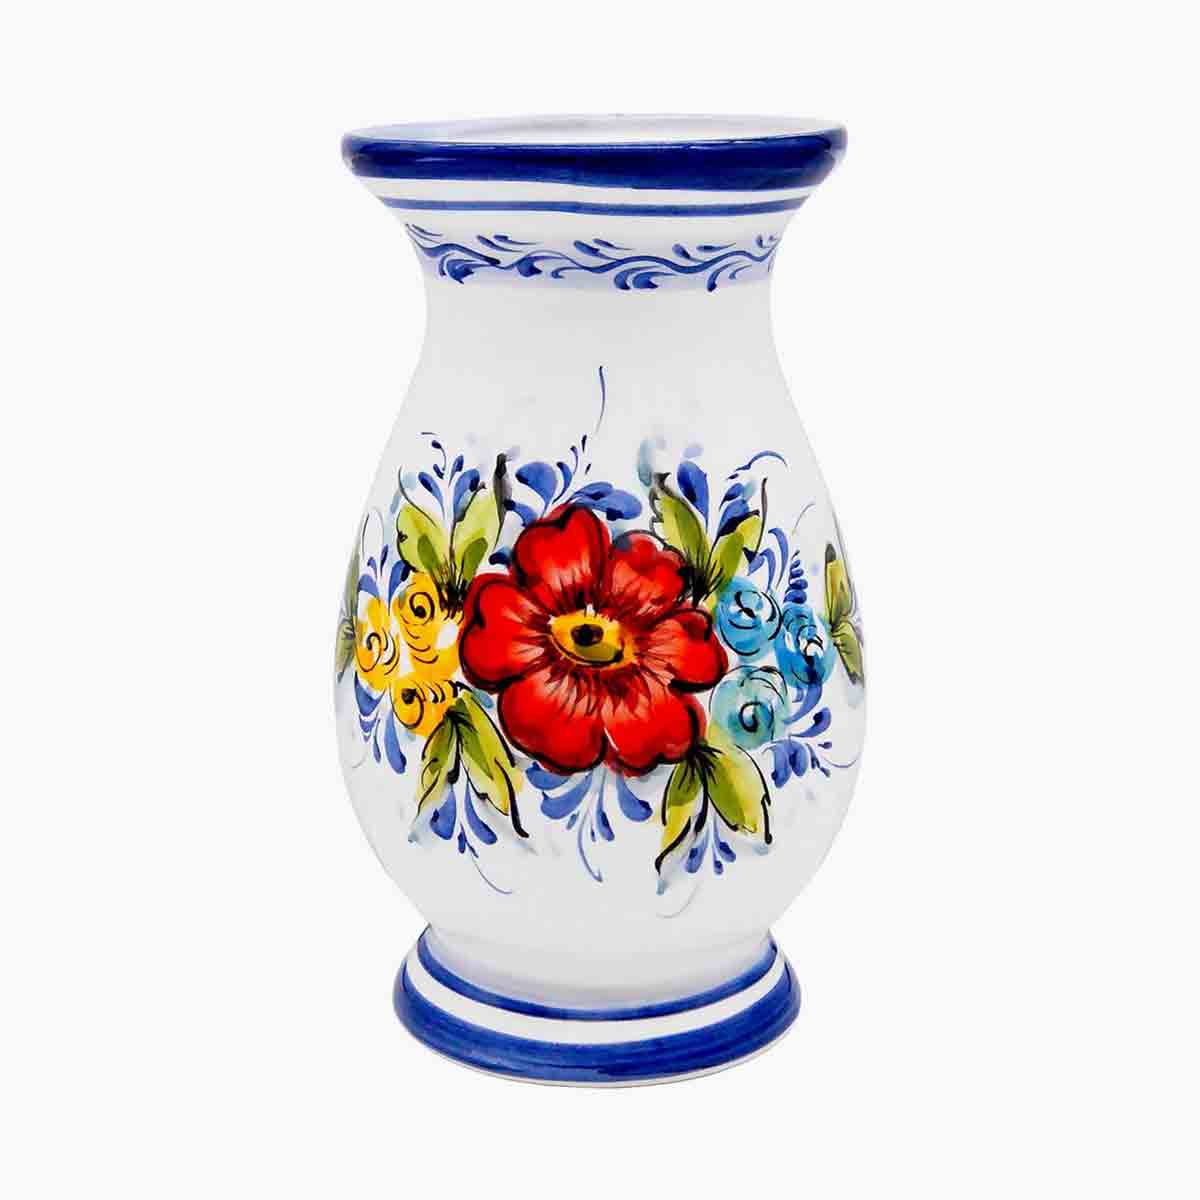 Faireal Portuguese Pottery Vase.